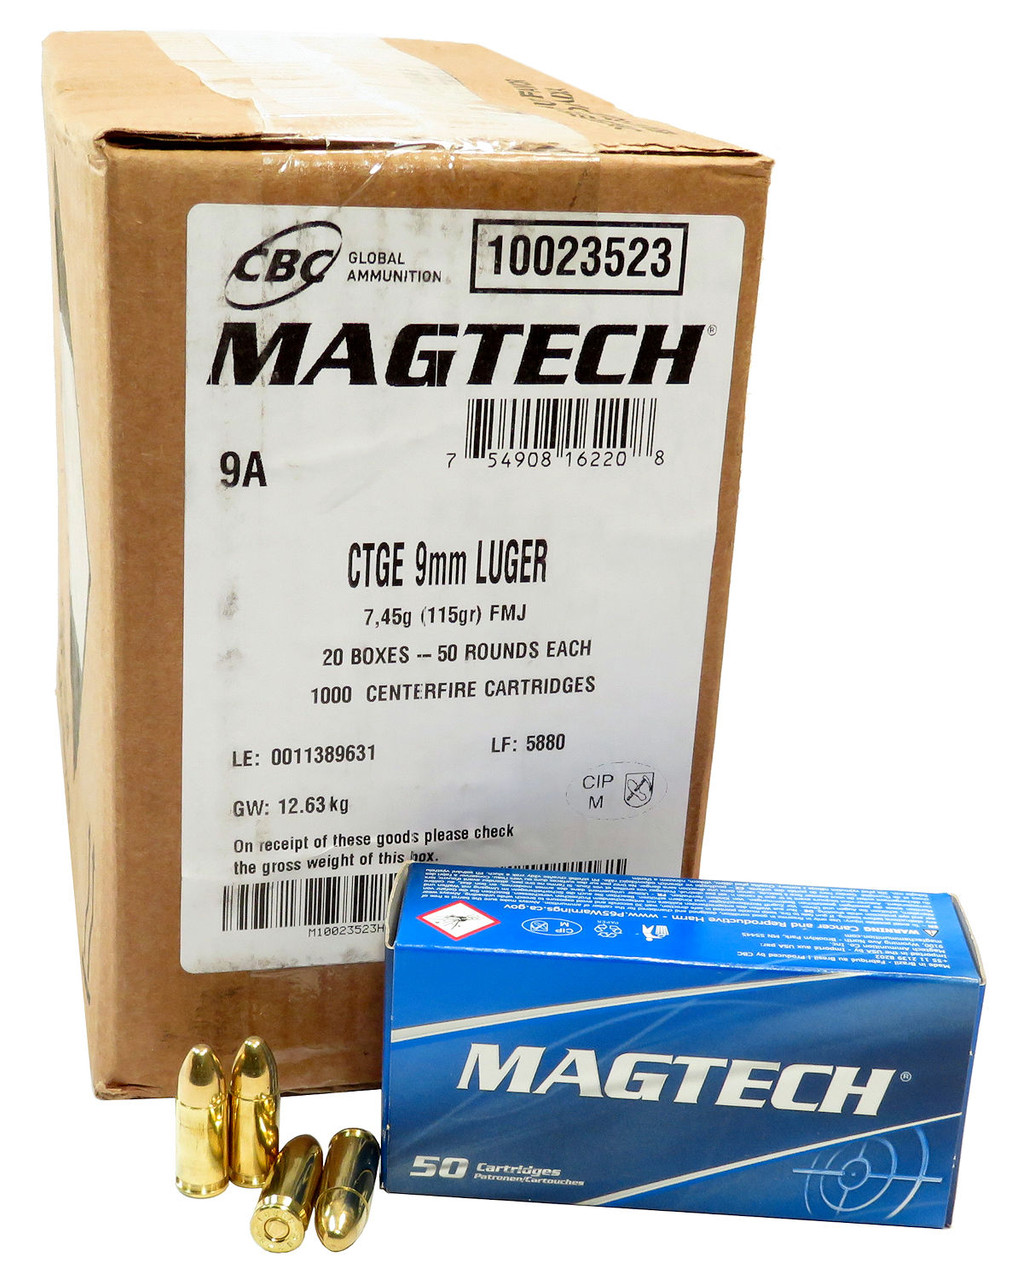 Magtech 9mm Luger 115gr Full Metal Jacket Ammo